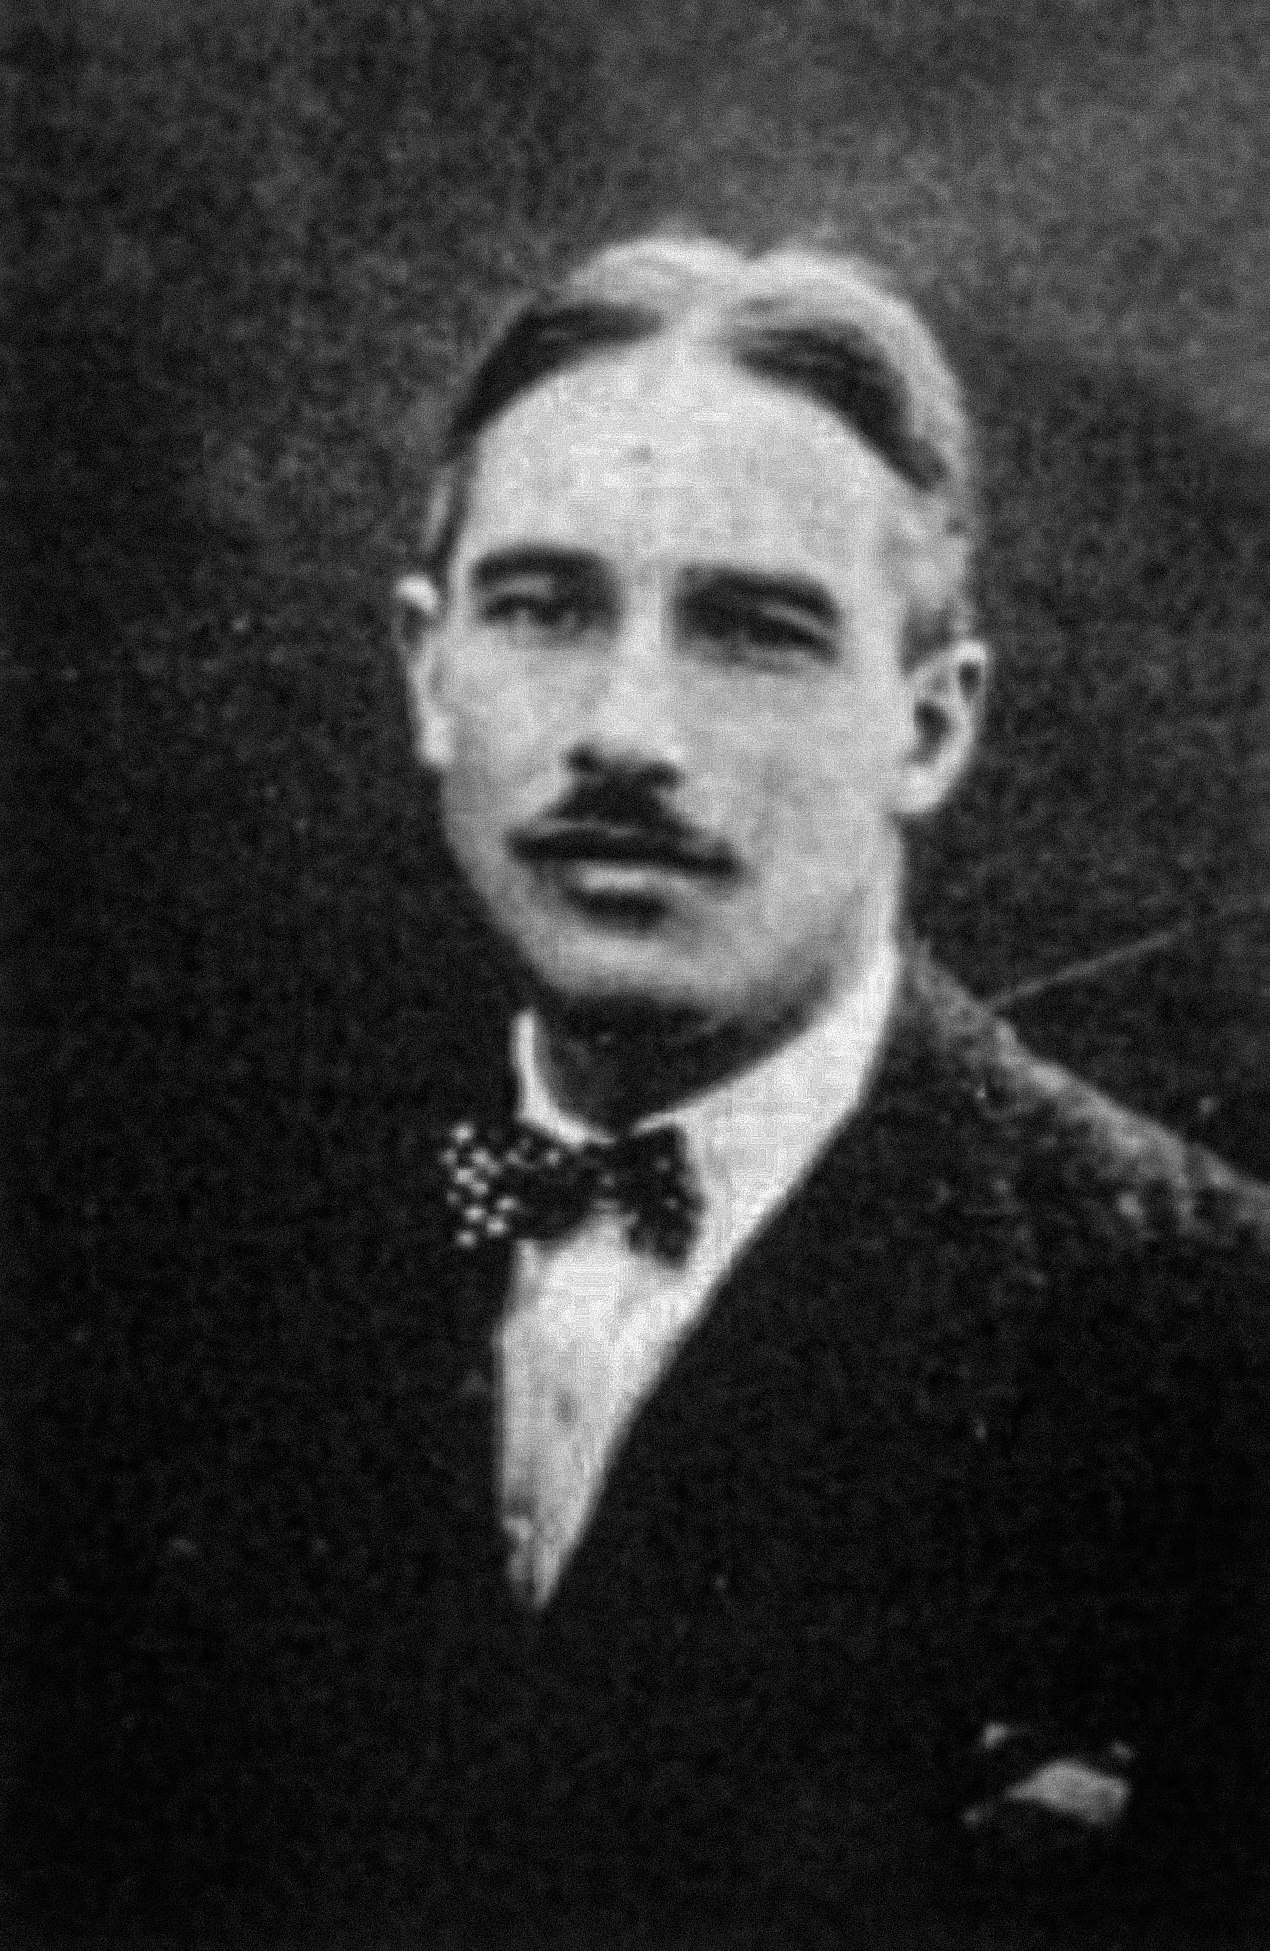 Francois de Loys (1892-1935) probably before Venezuela expedition 1917